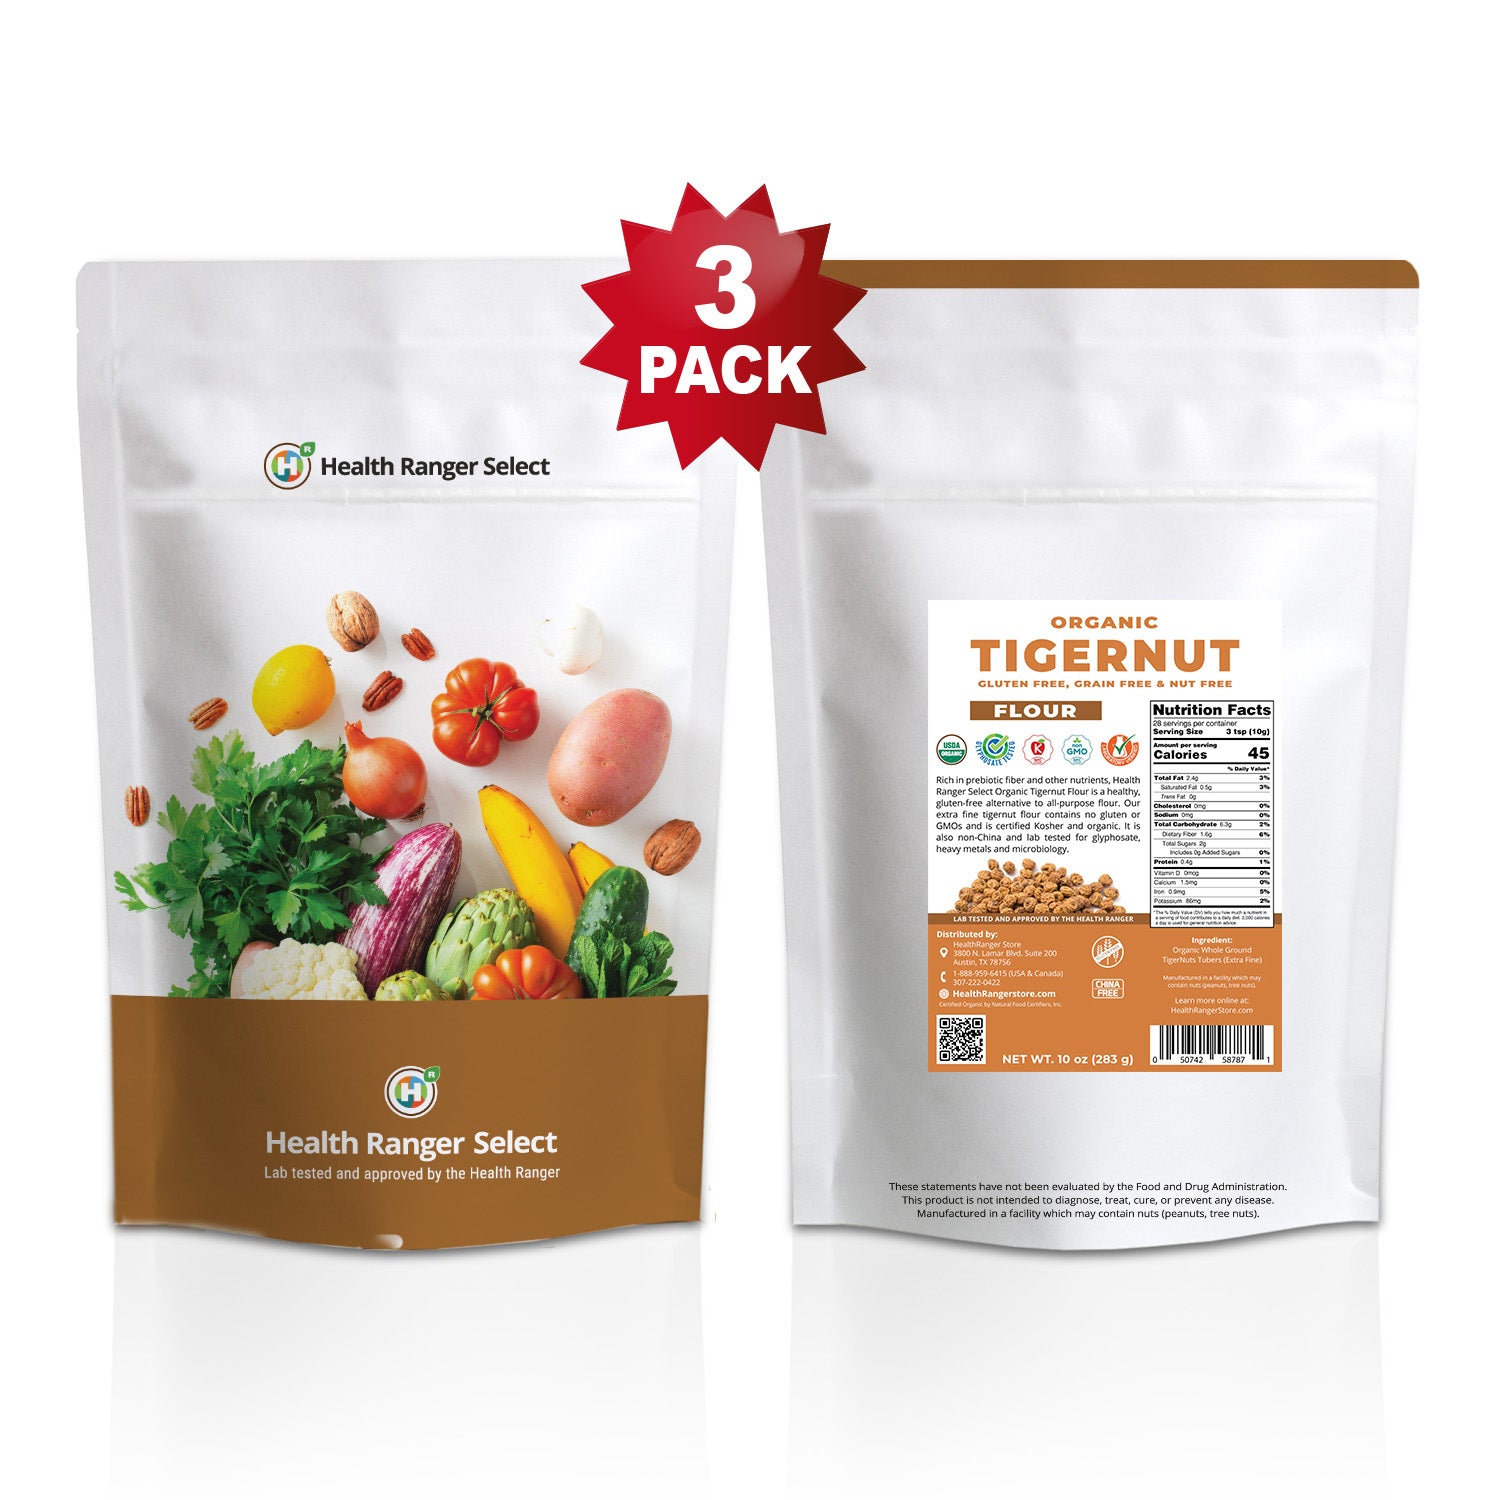 Organic Tigernut Flour 10oz (283 g) (3-Pack) - Gluten Free, Grain Free and Nut Free